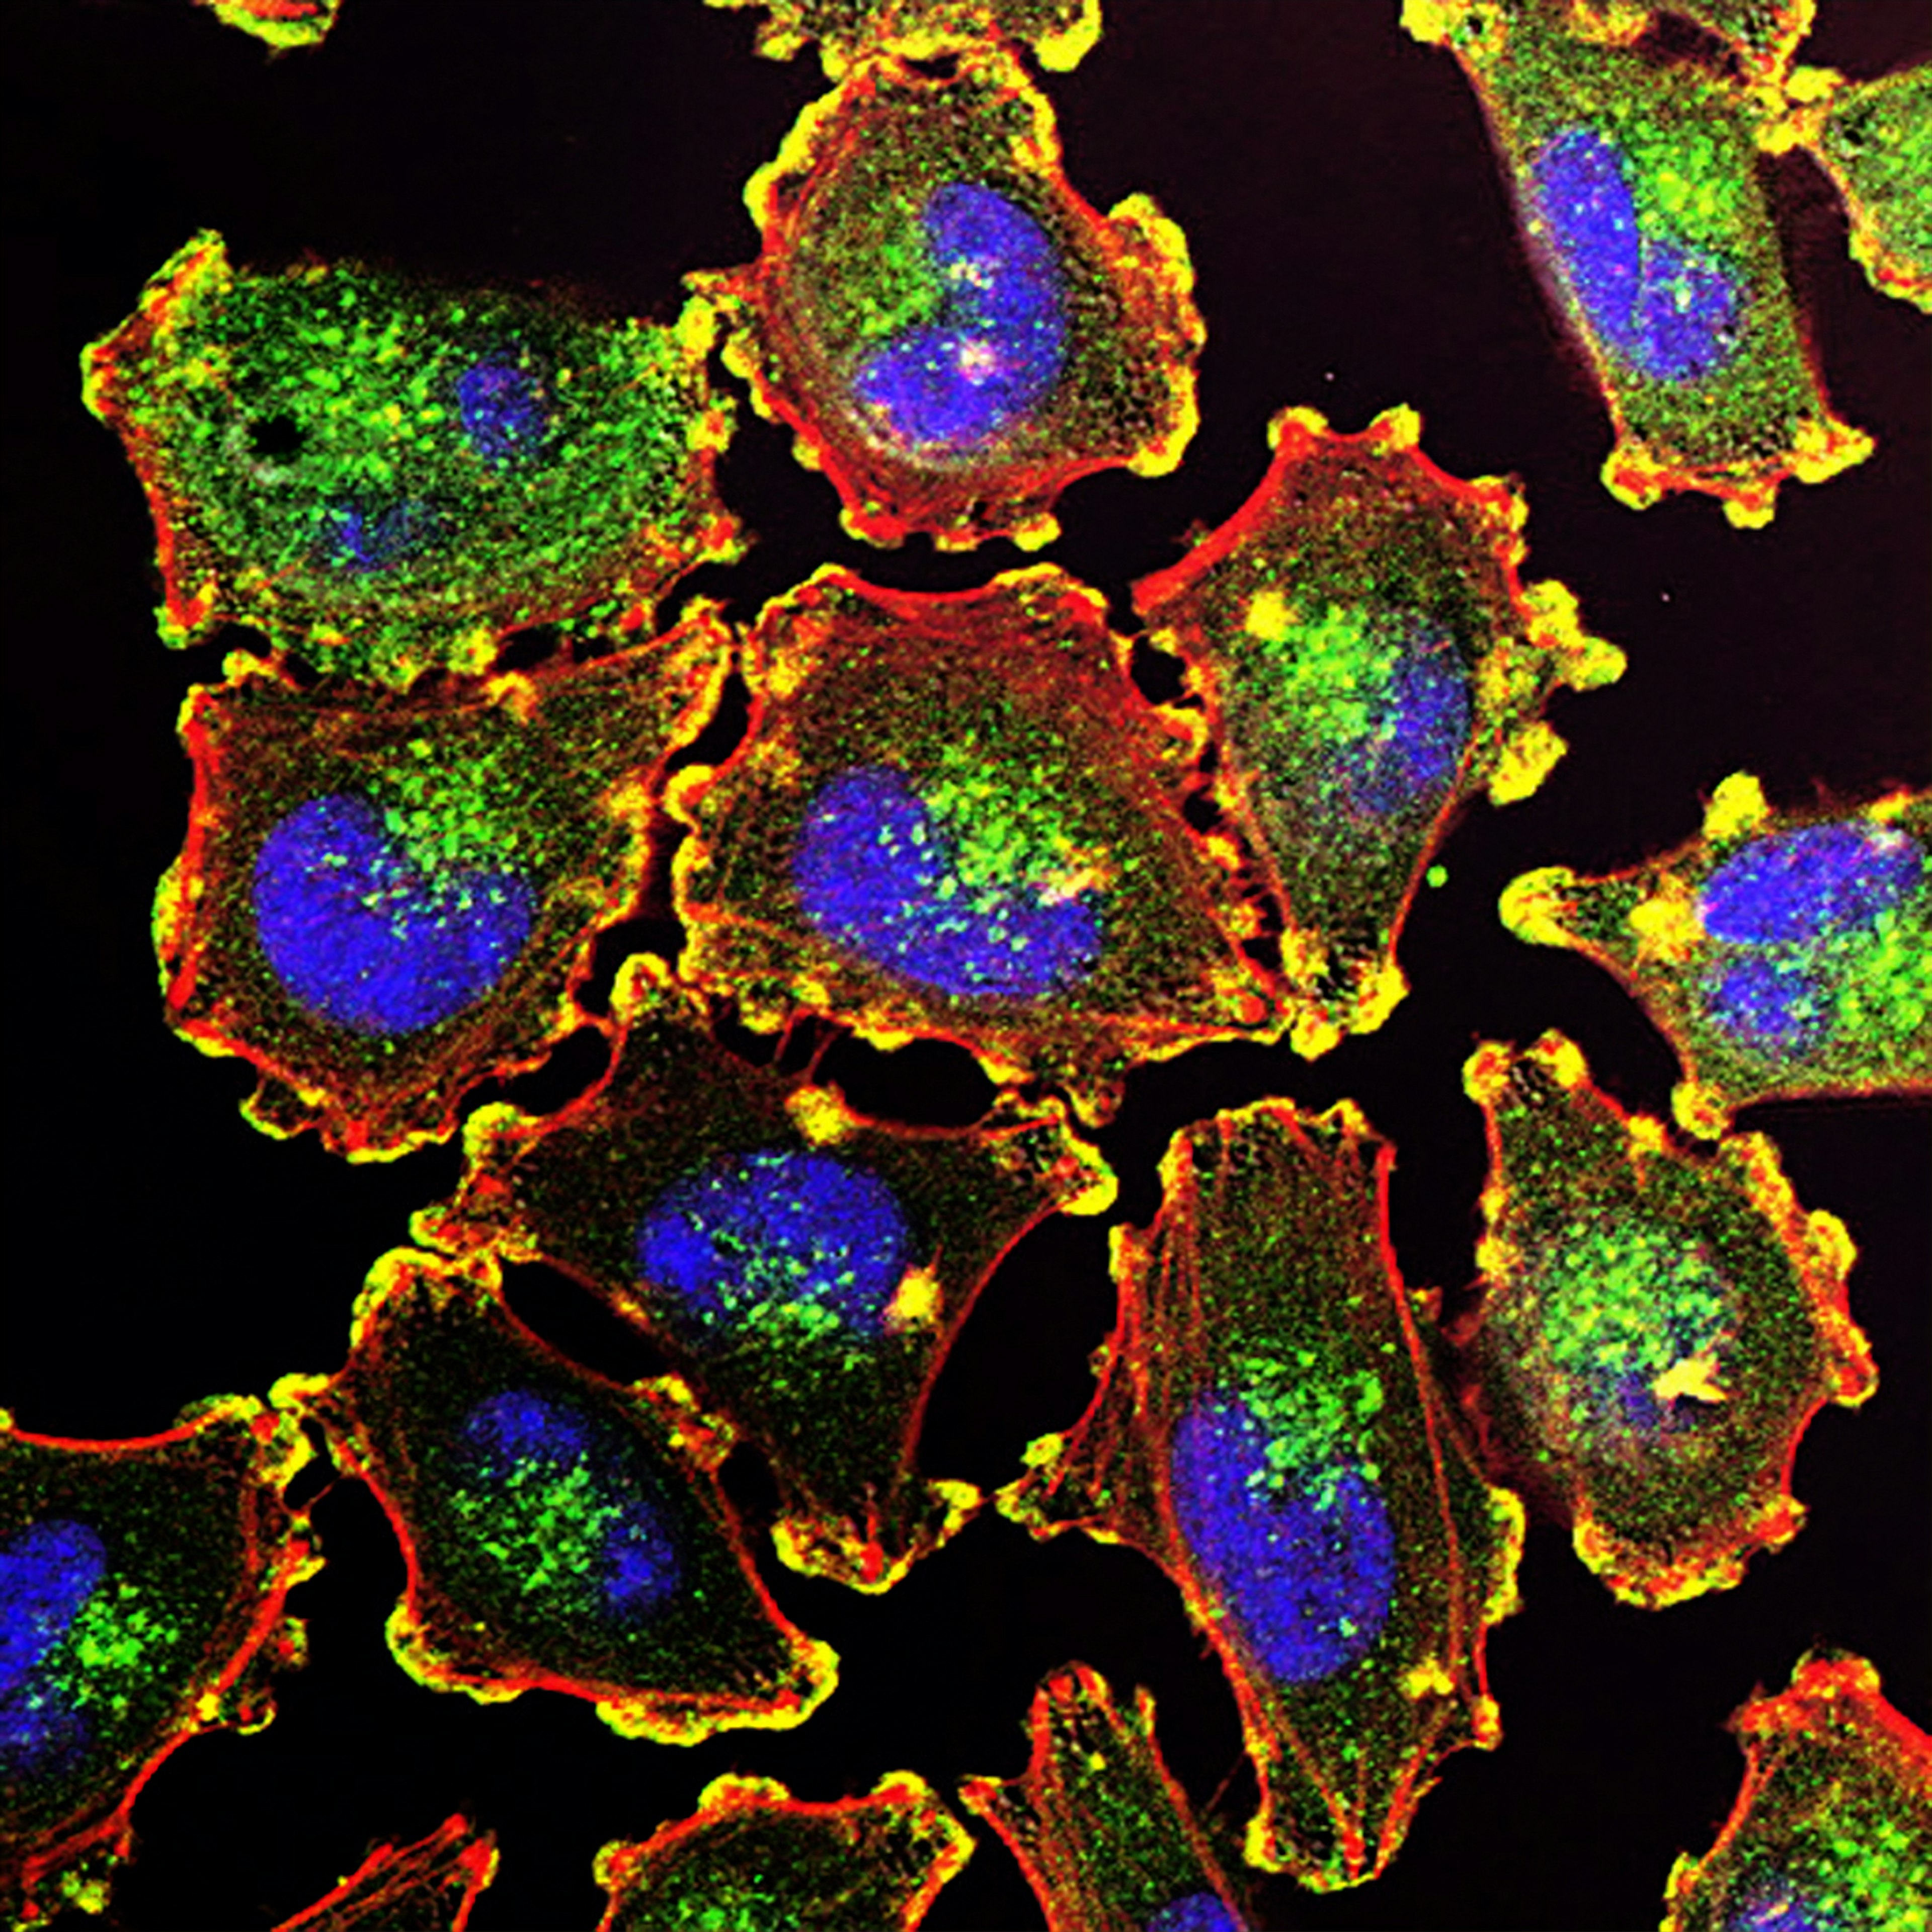 metastatic melanoma cancer cells